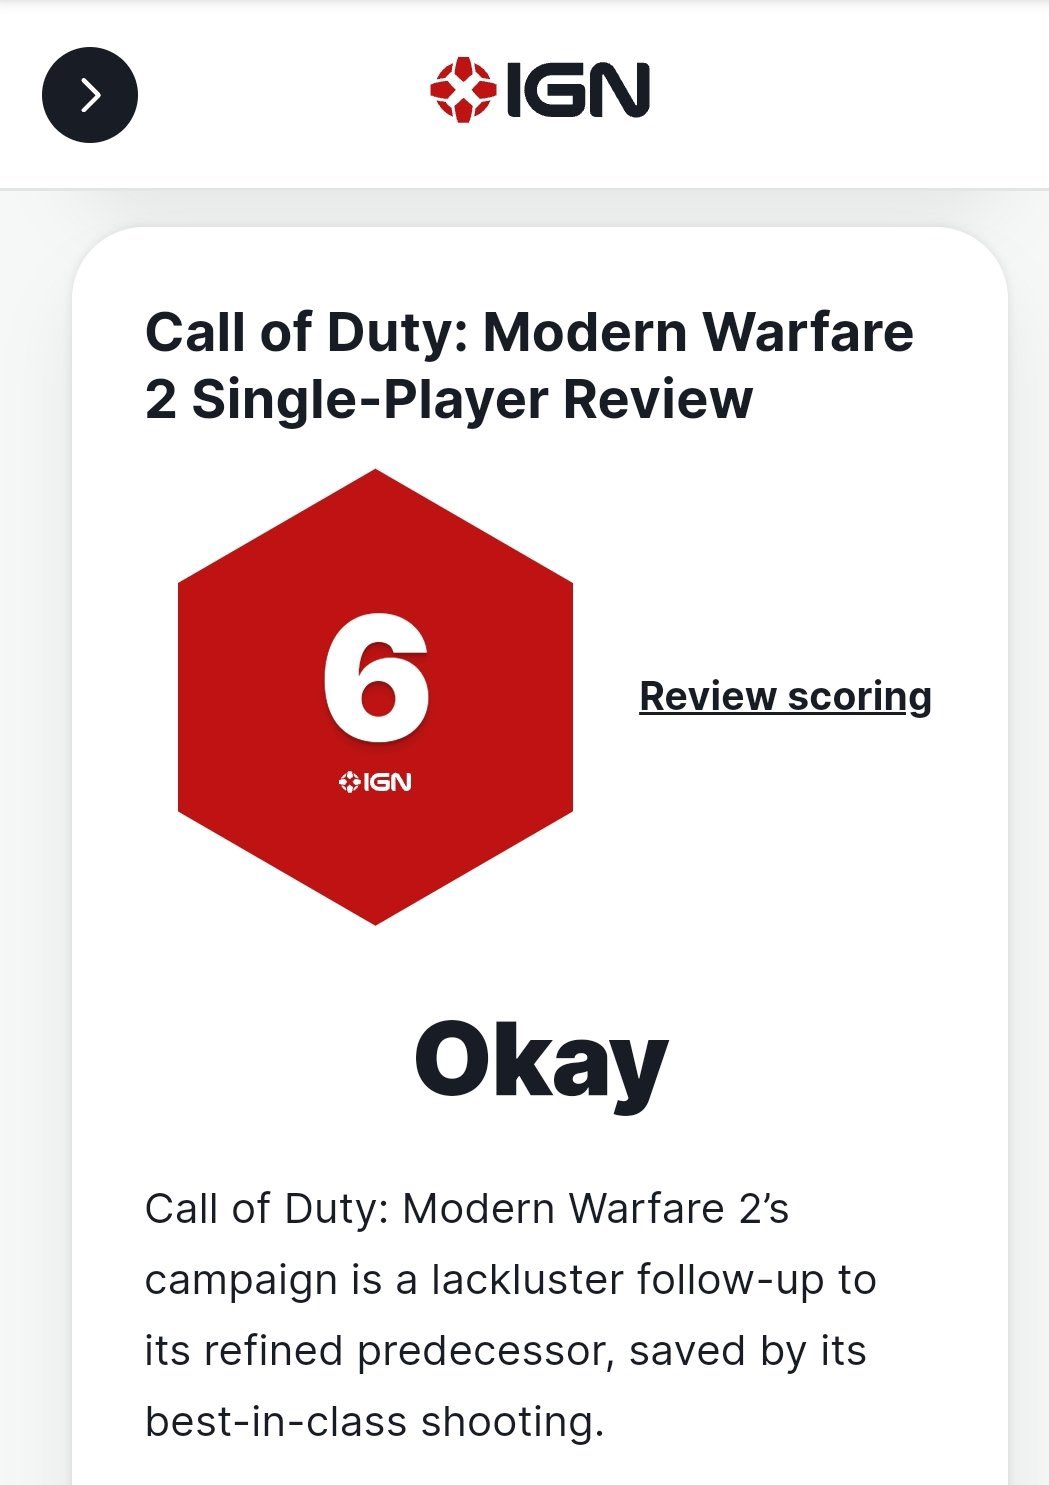 Call of Duty: Modern Warfare Mobile - IGN